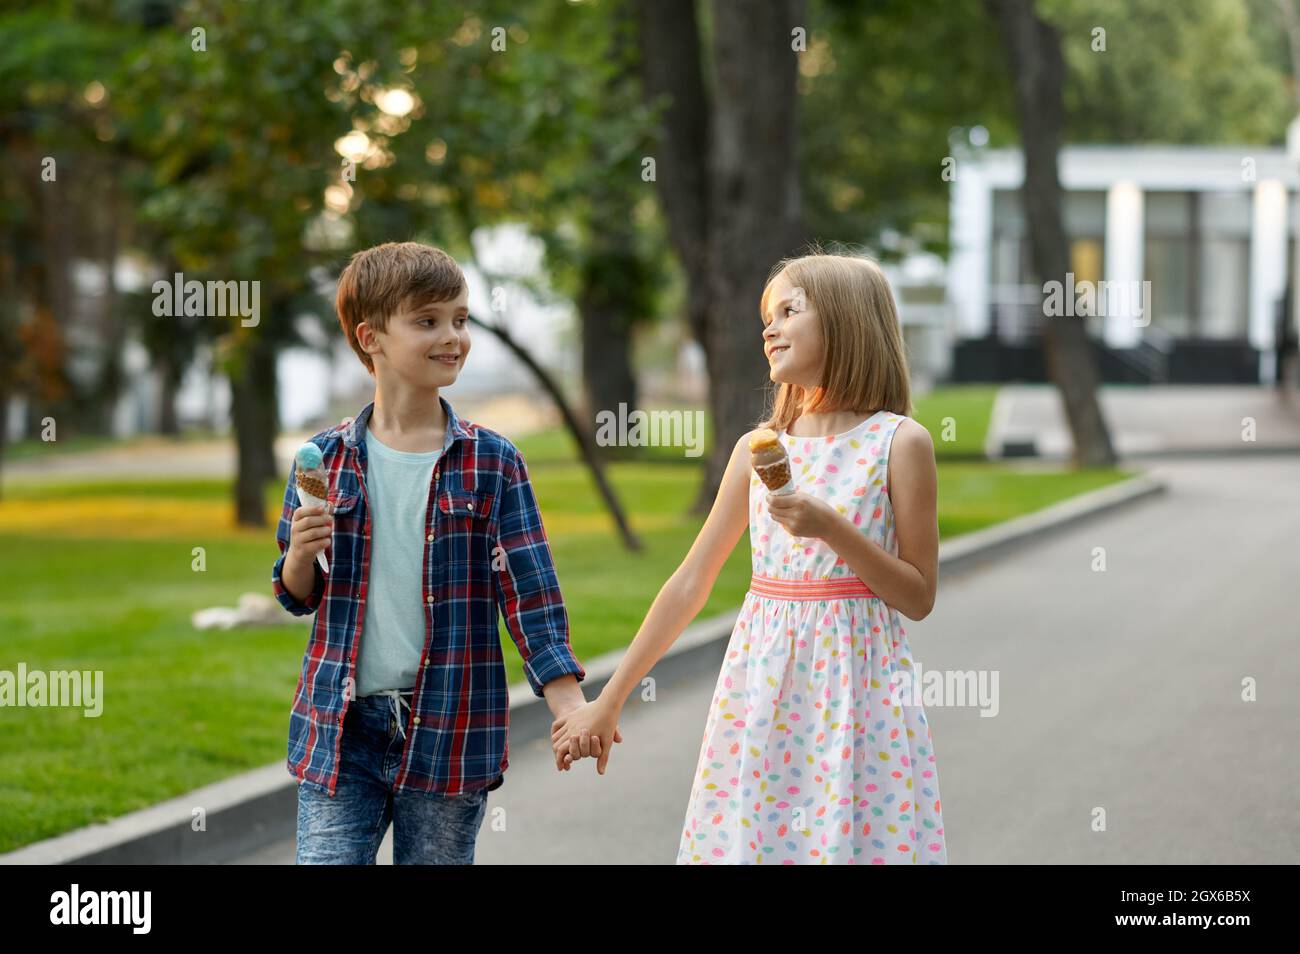 Children's date, boy and girl eating ice cream Stock Photo